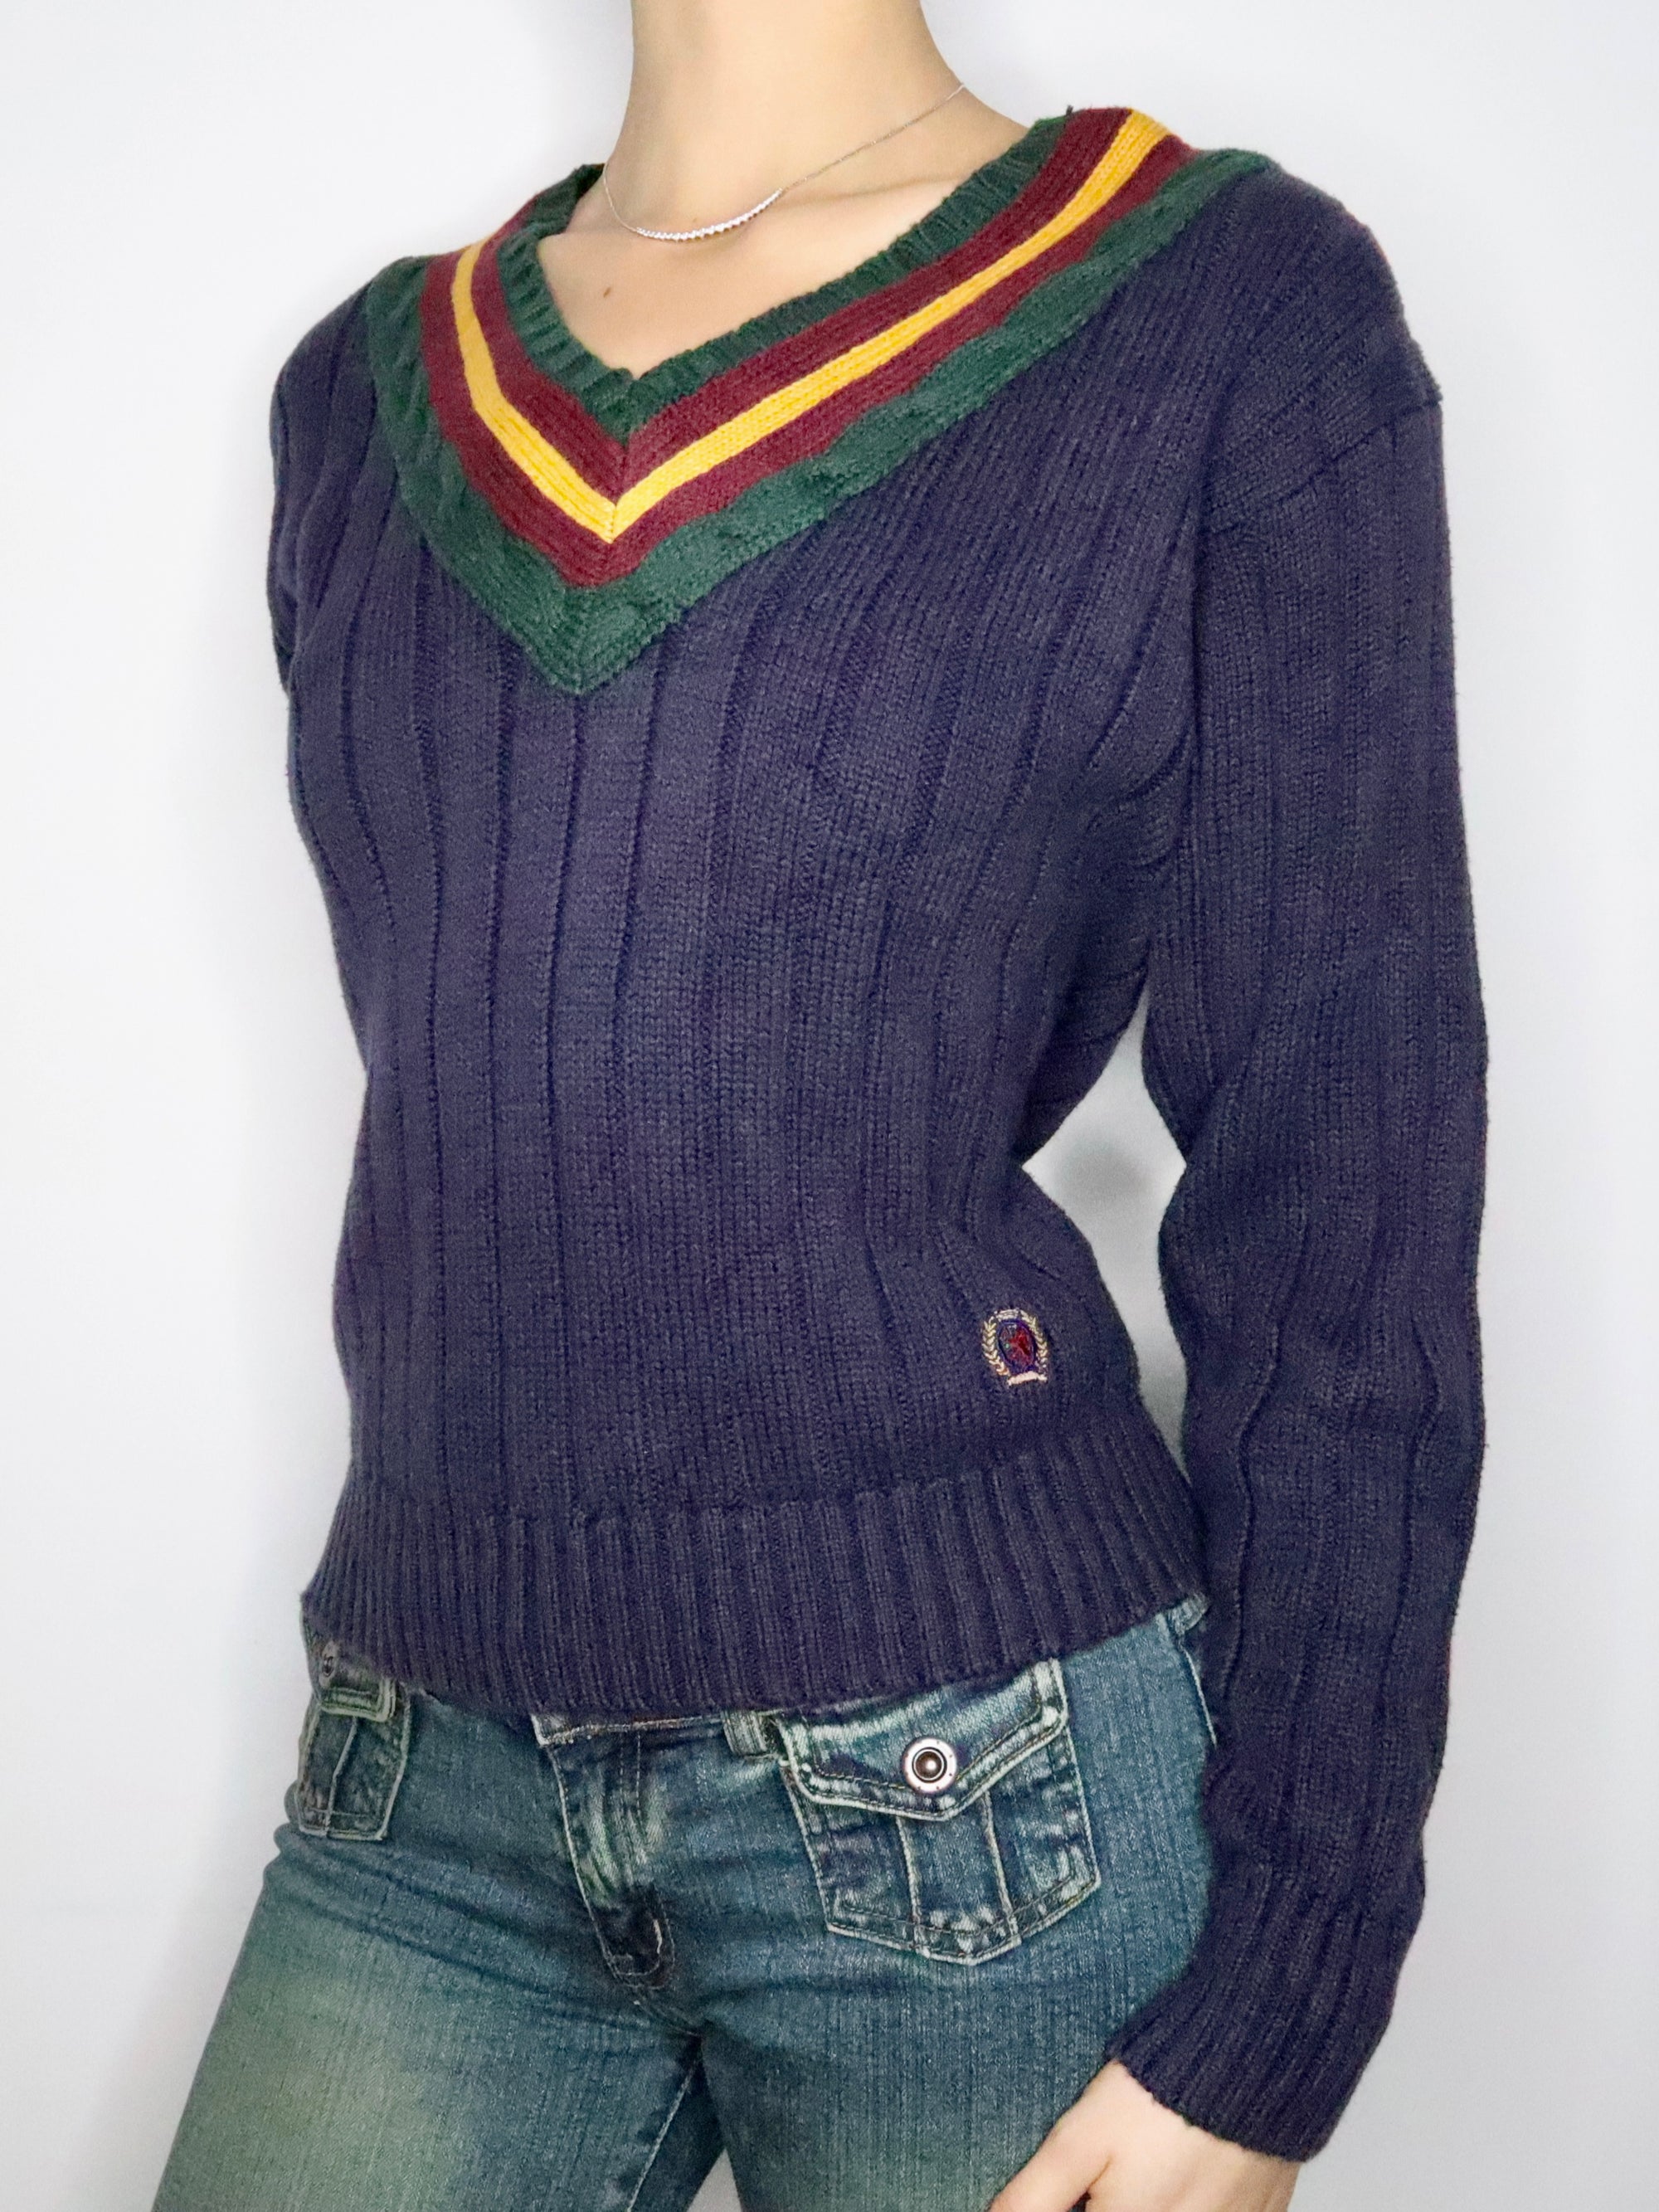 Tommy Hilfiger Navy Sweater (M-L) 